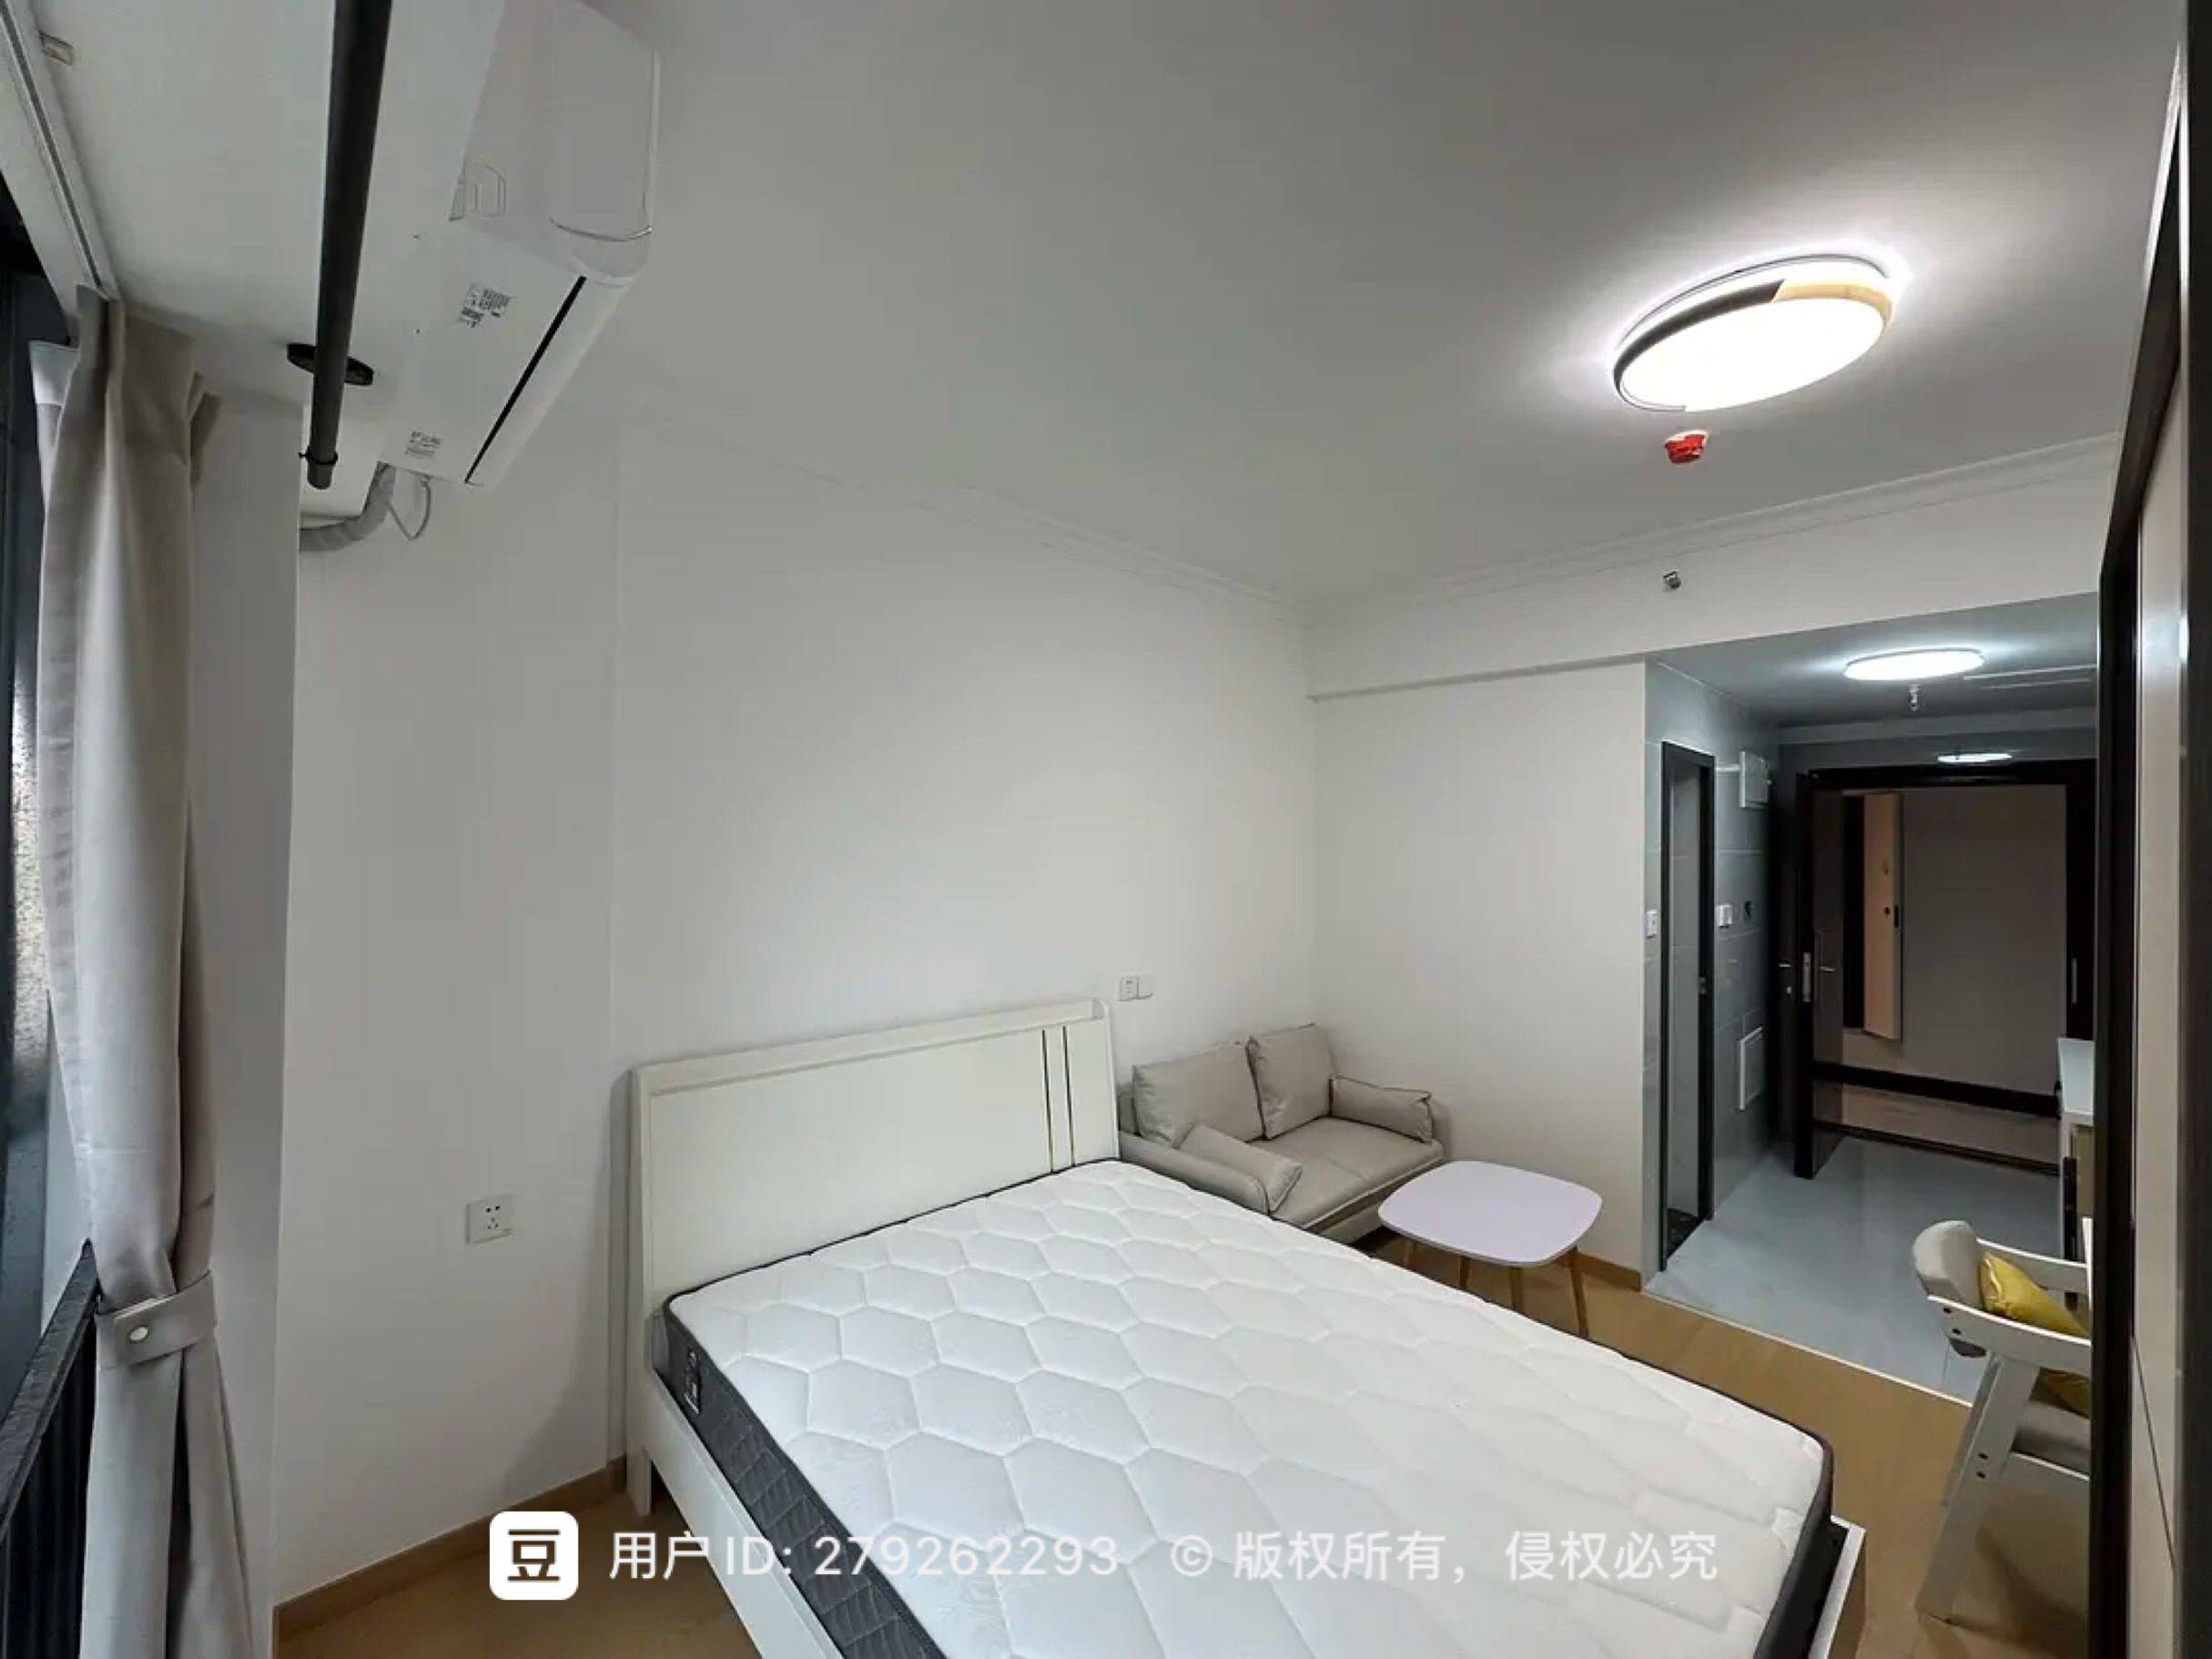 Changsha-Yuhua-Cozy Home,No Gender Limit